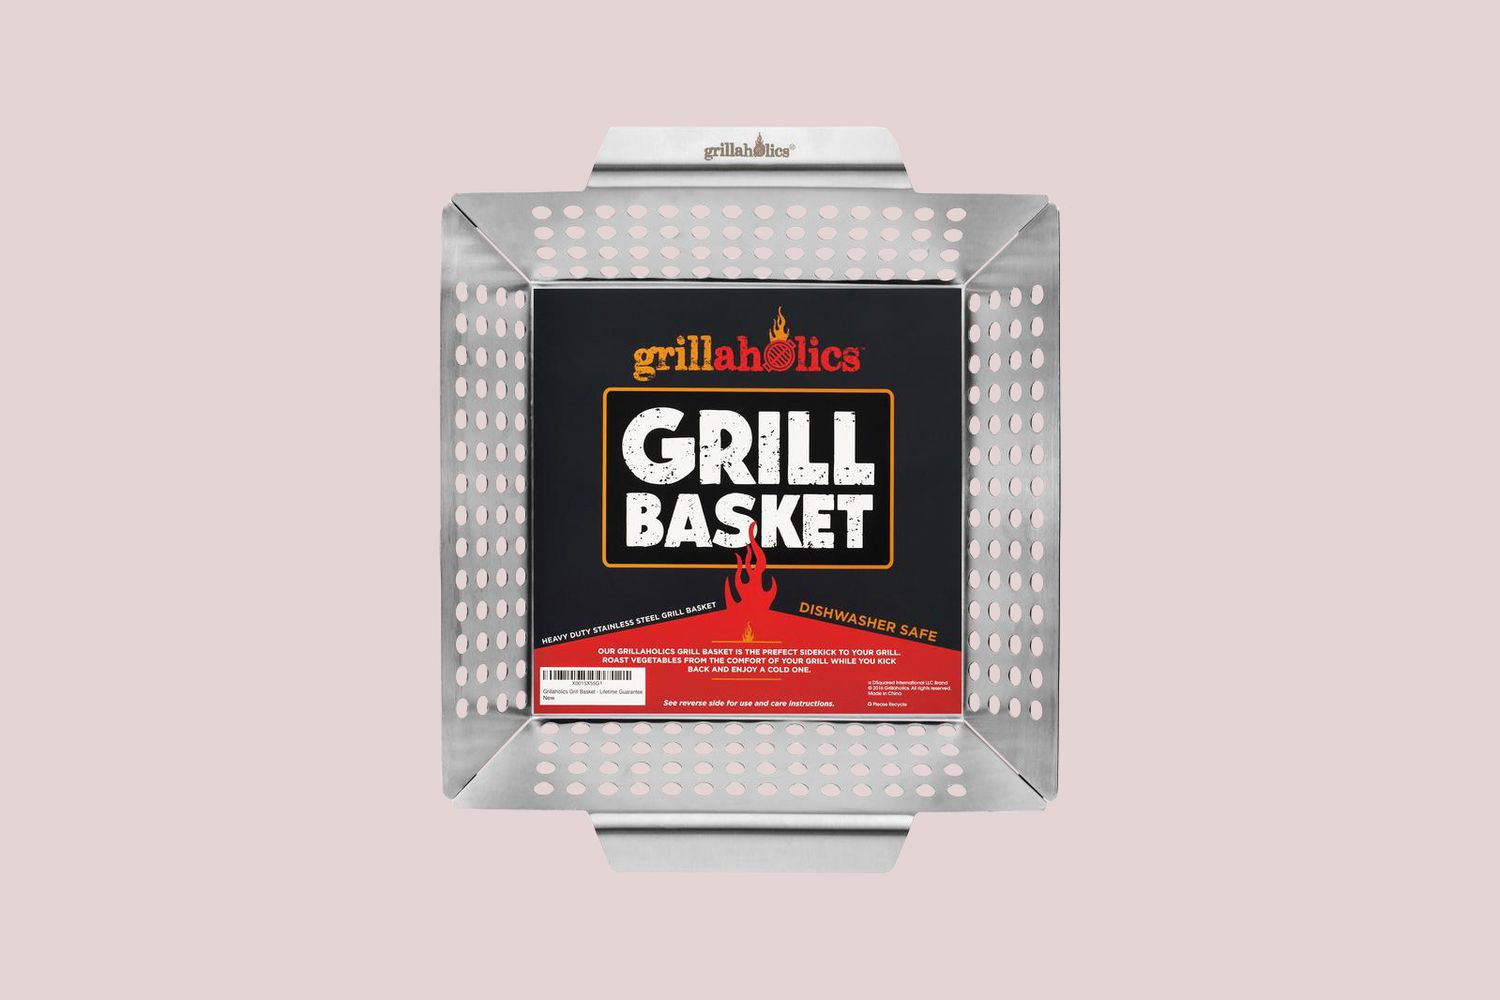 grillaholics metal grill basket